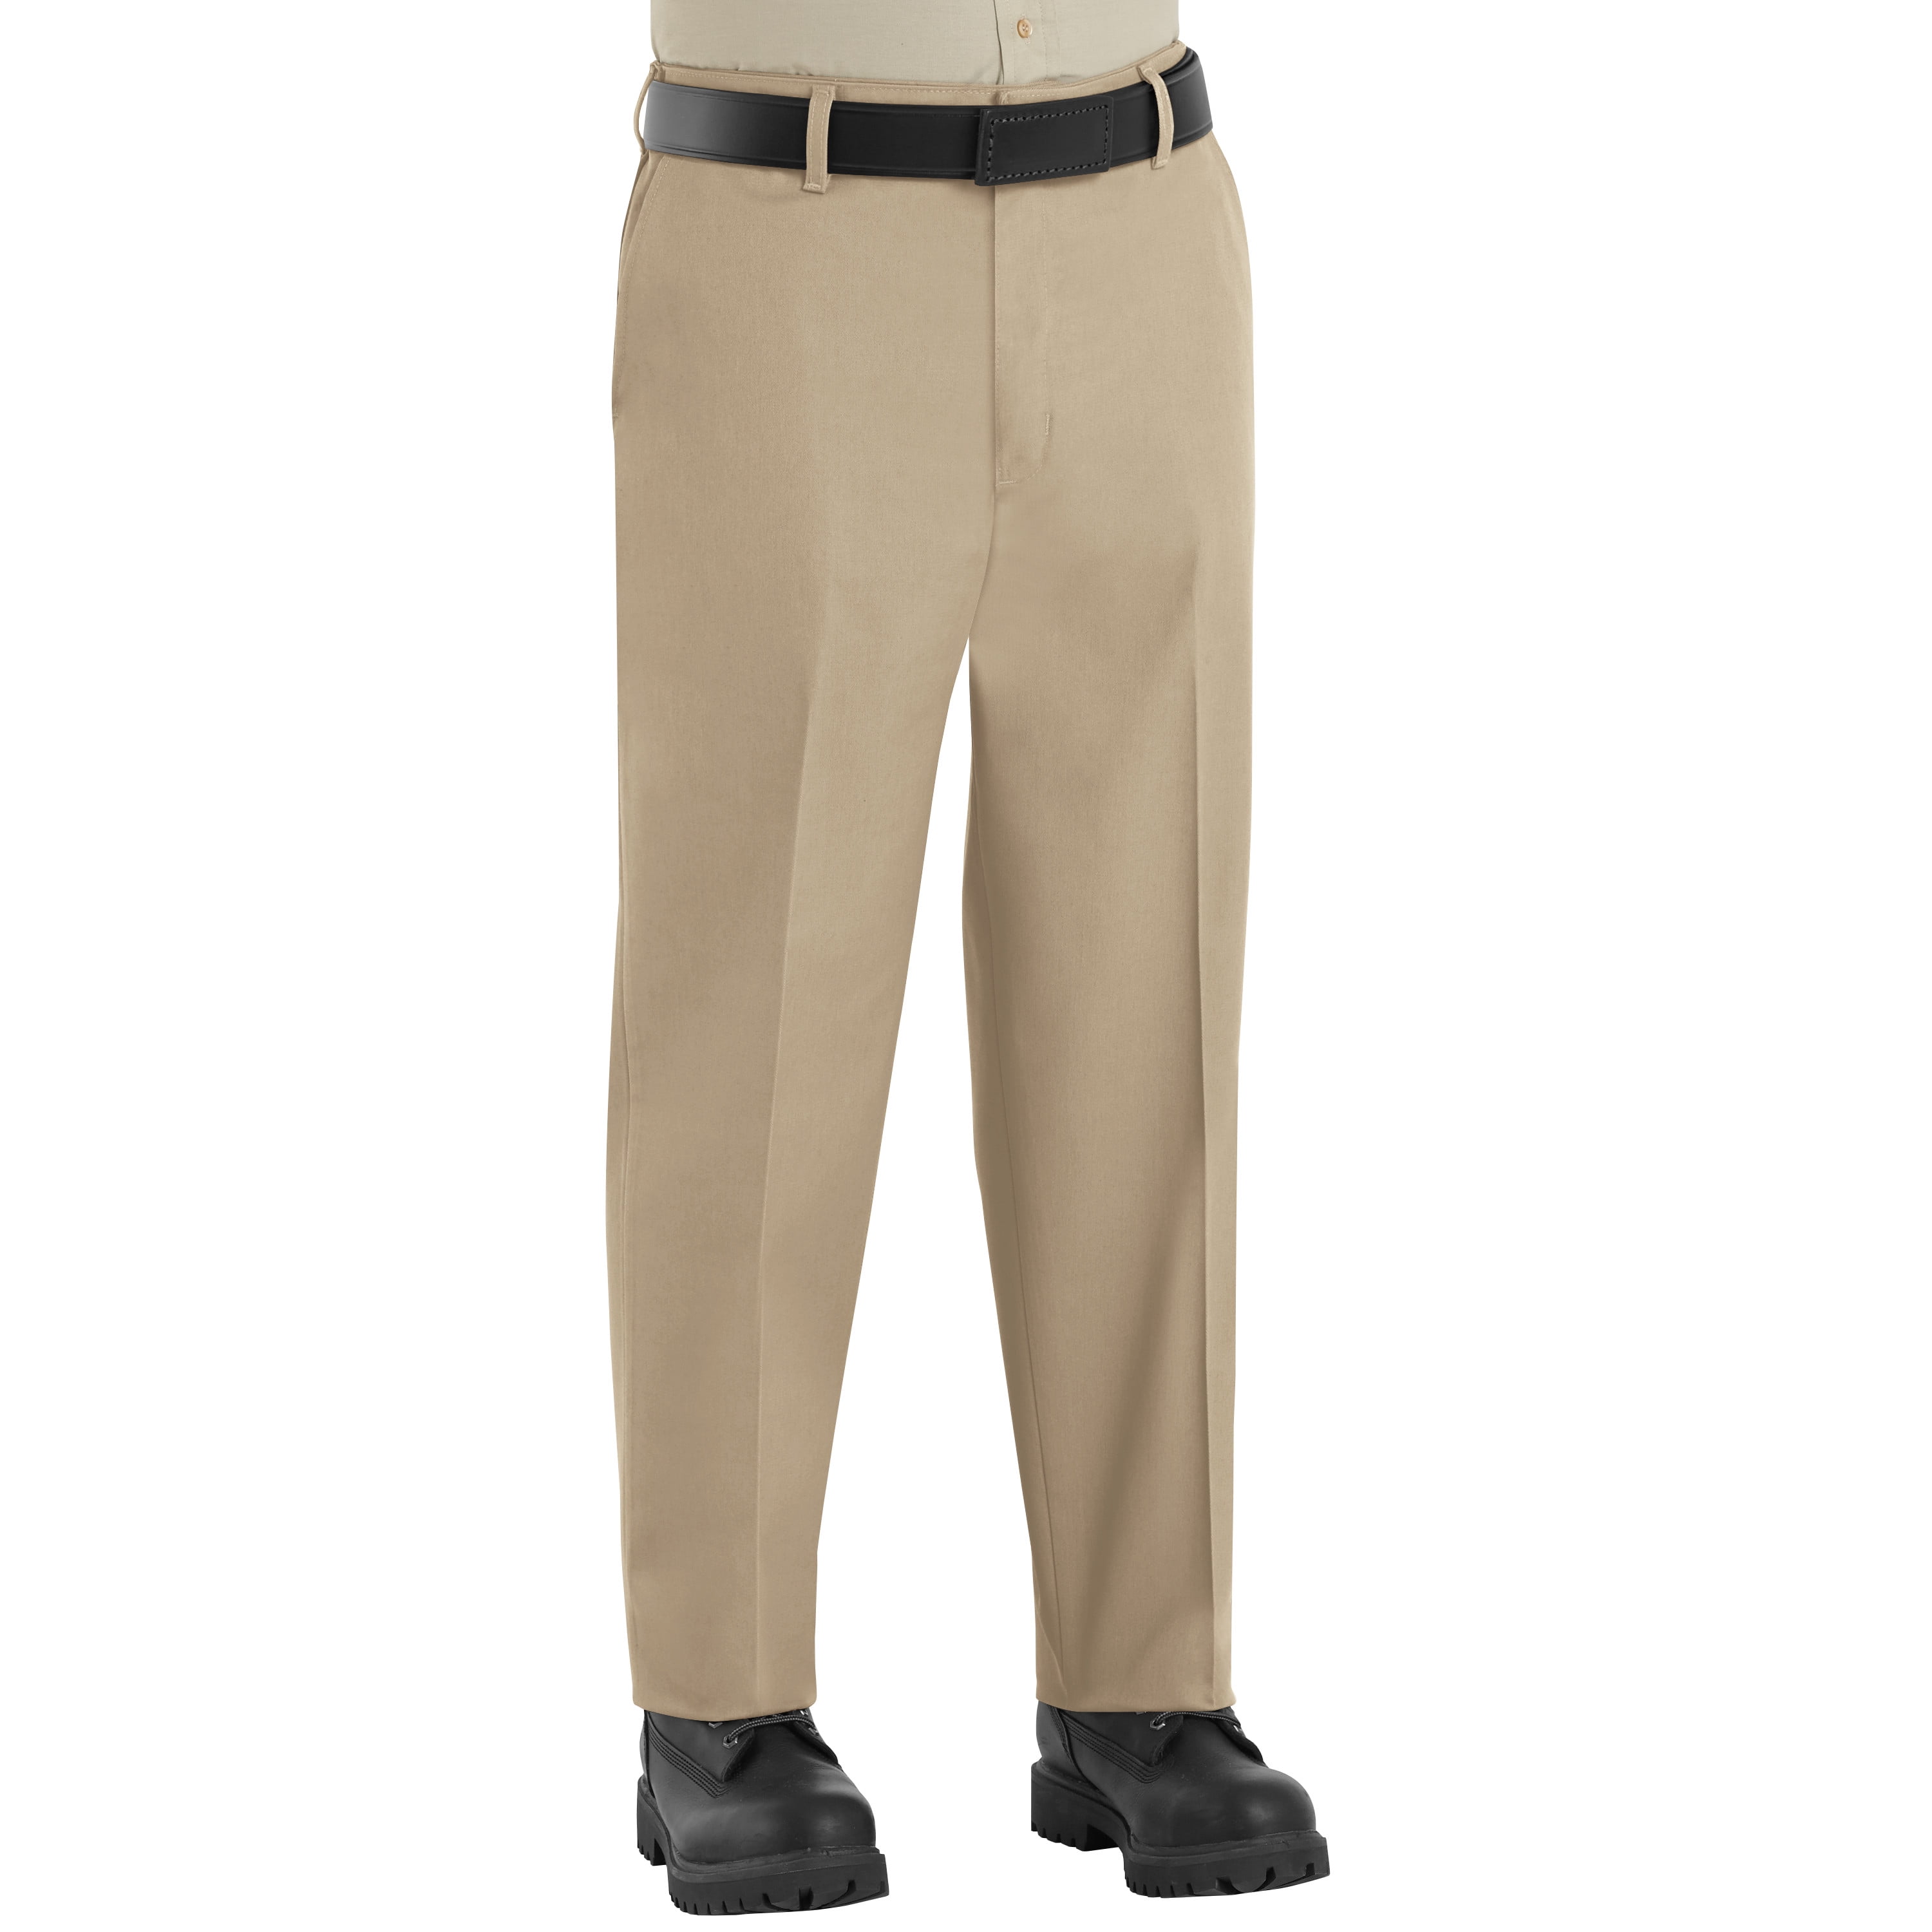 Red Kap Men Pant Industrial Elastic Insert Work Uniform Brown Irregular NEW PT60 